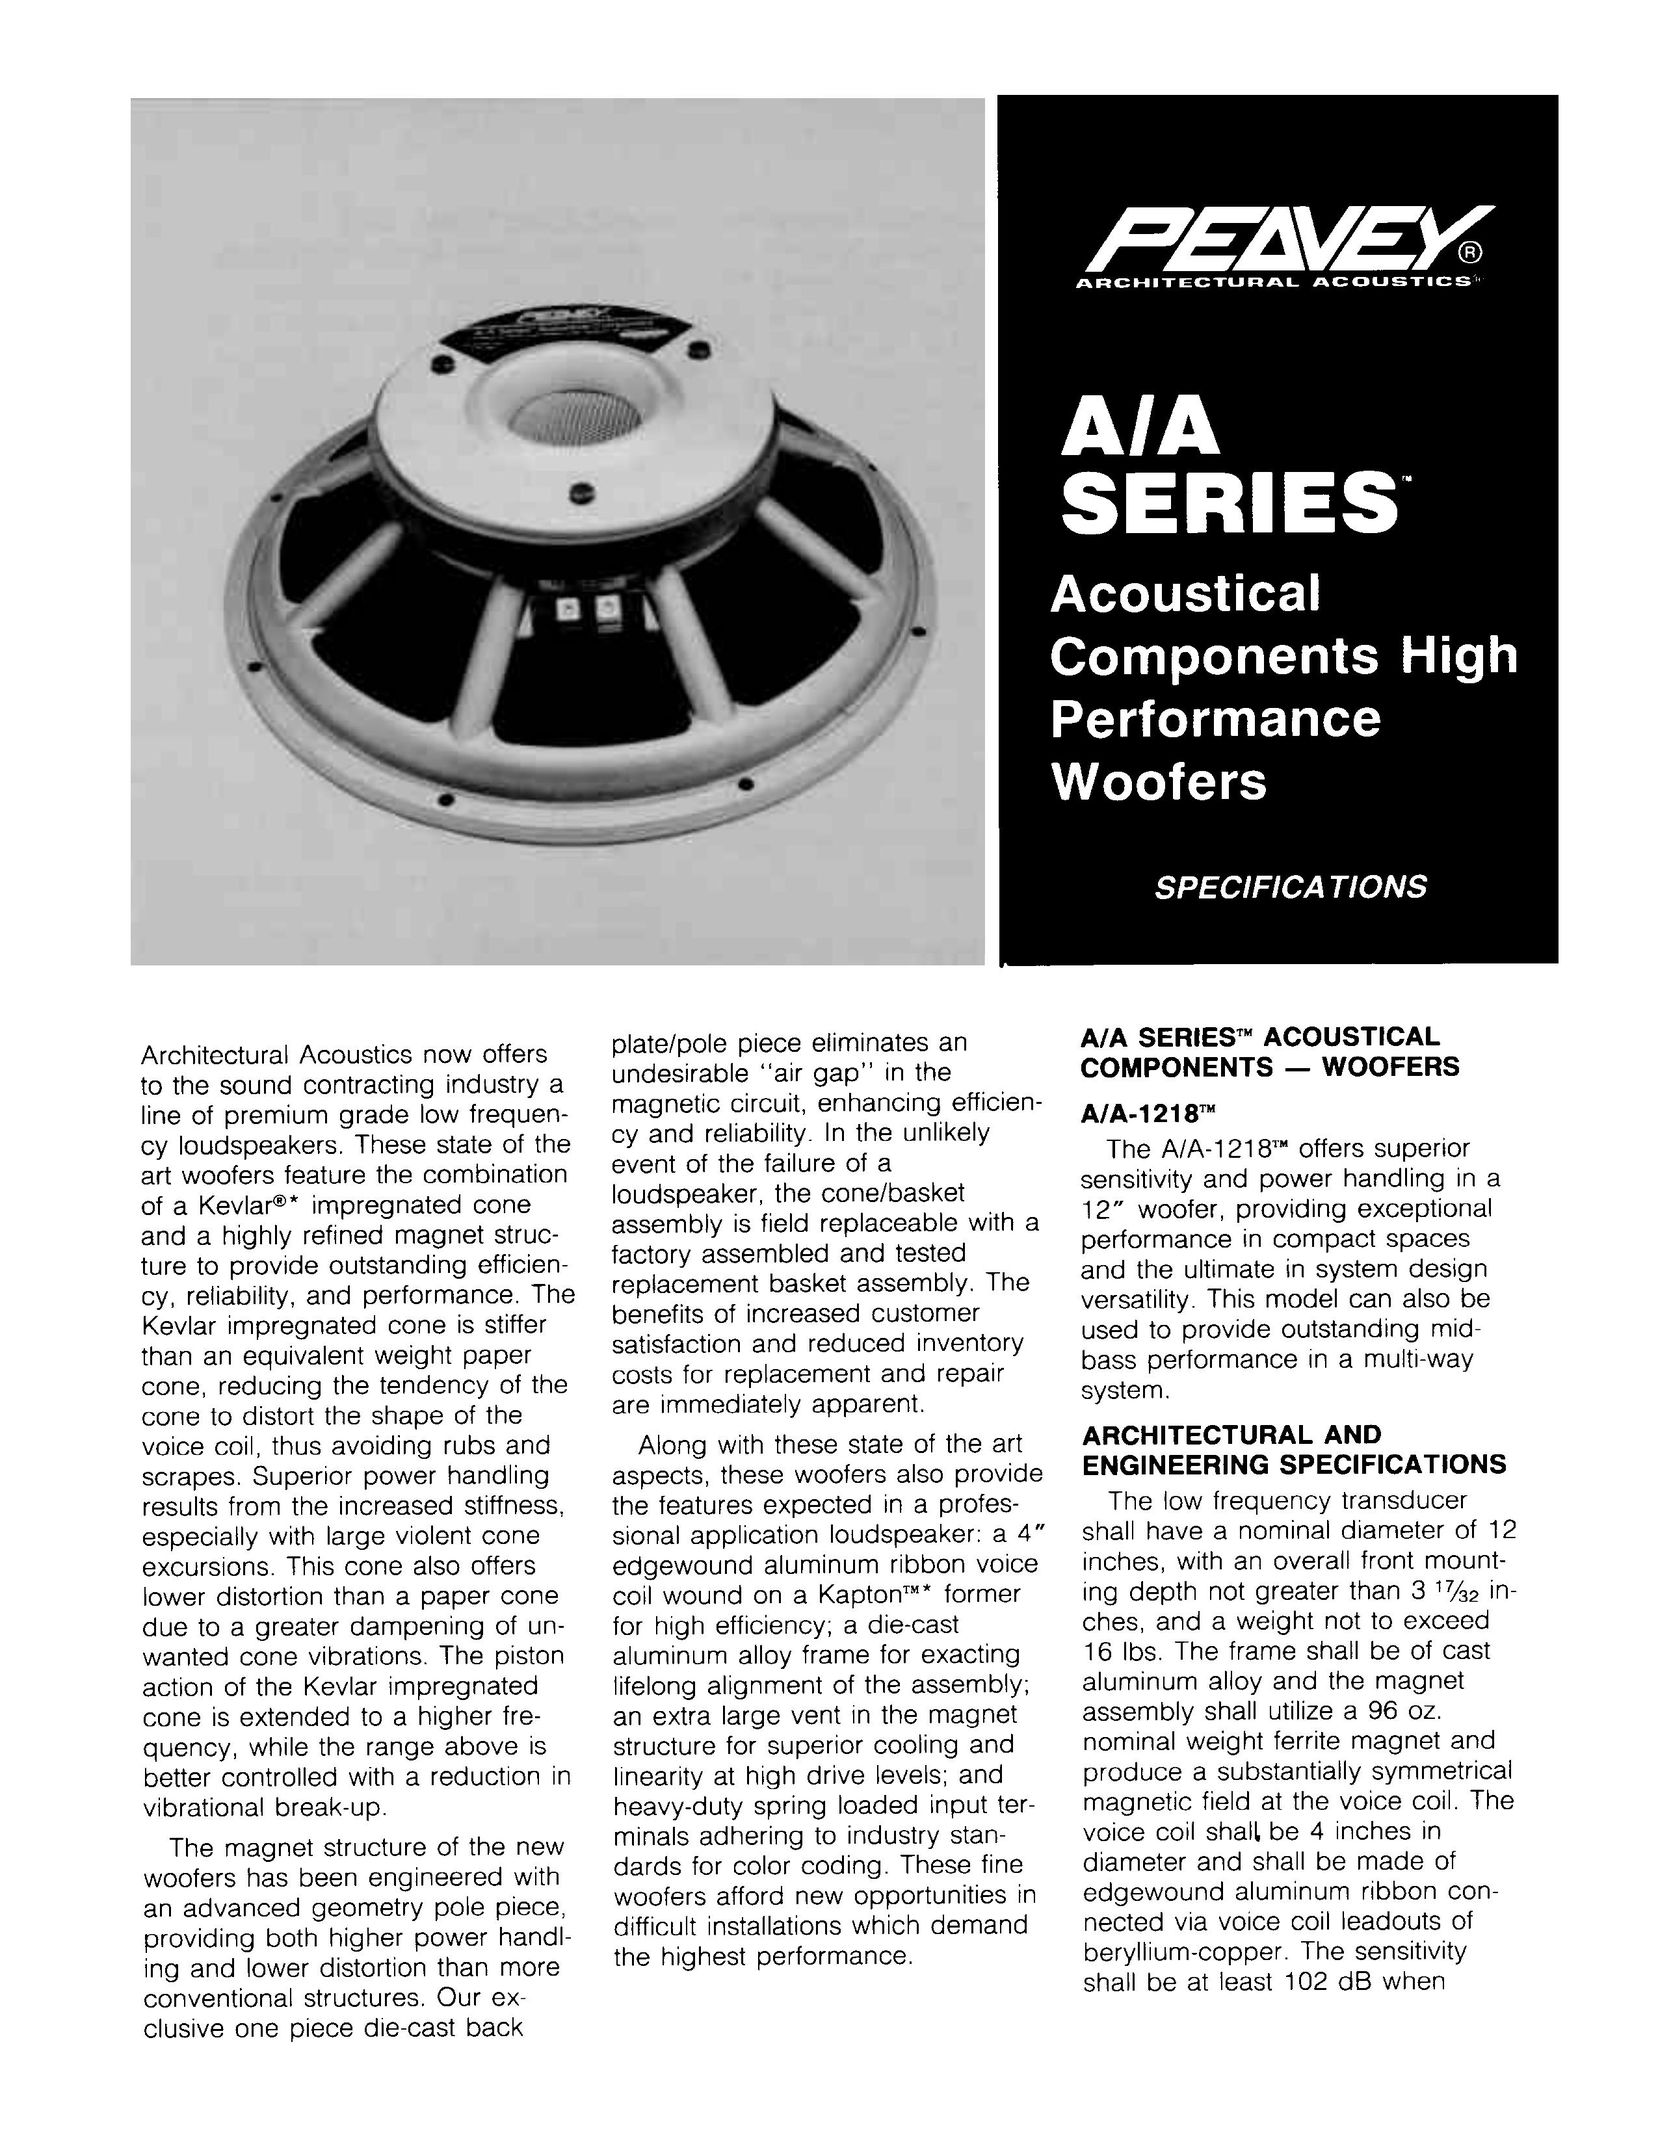 Peavey A/A Series Speaker User Manual